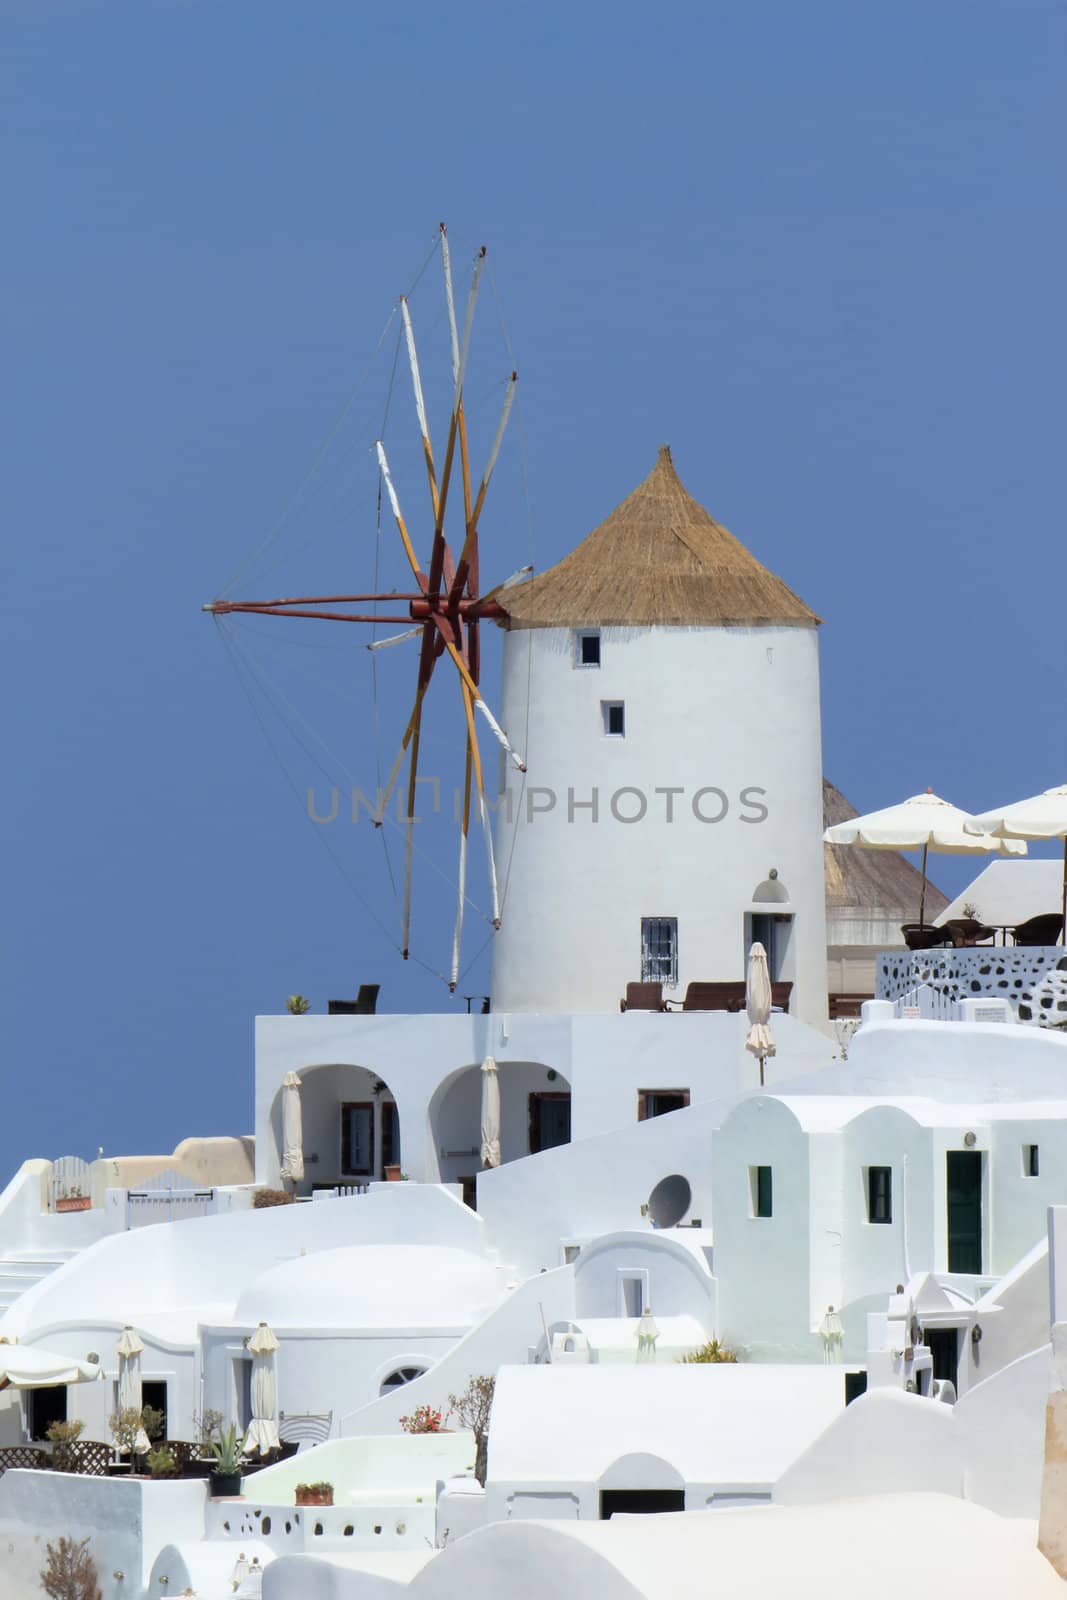 Old windmill at Oia, Santorini, Greece by Elenaphotos21